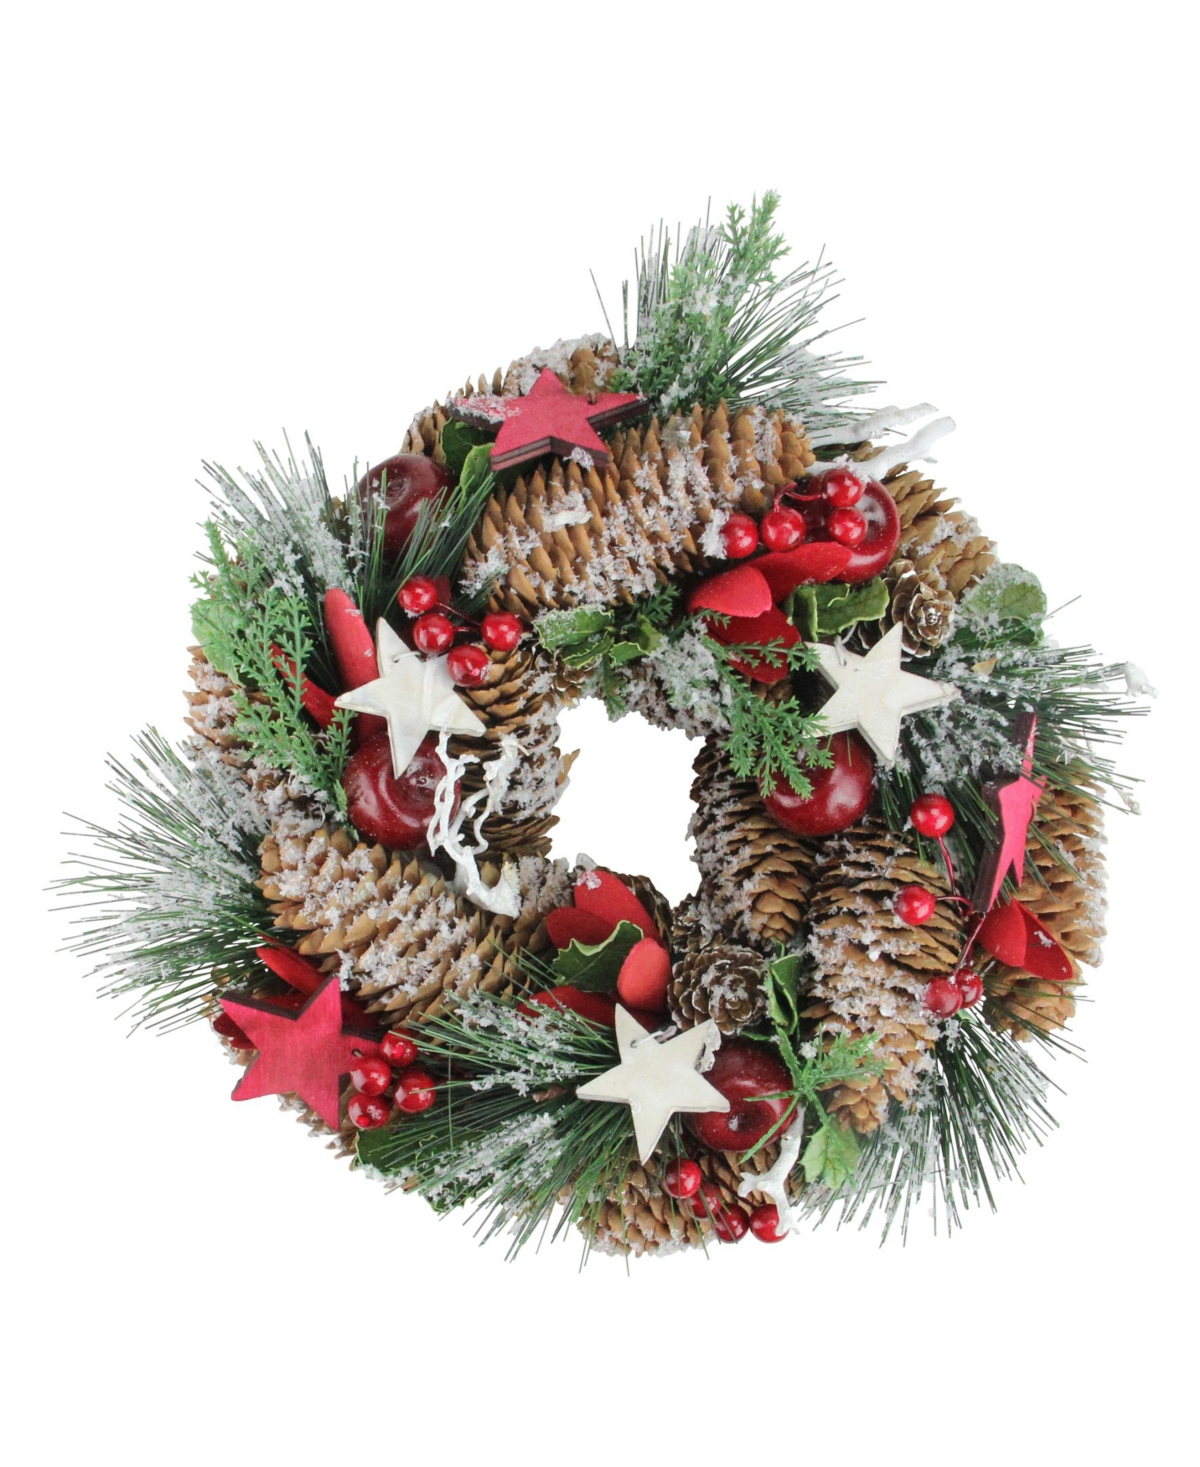 10" Stars Berries and Pine Cones Decorative Pine Christmas Wreath - Unlit - Brown